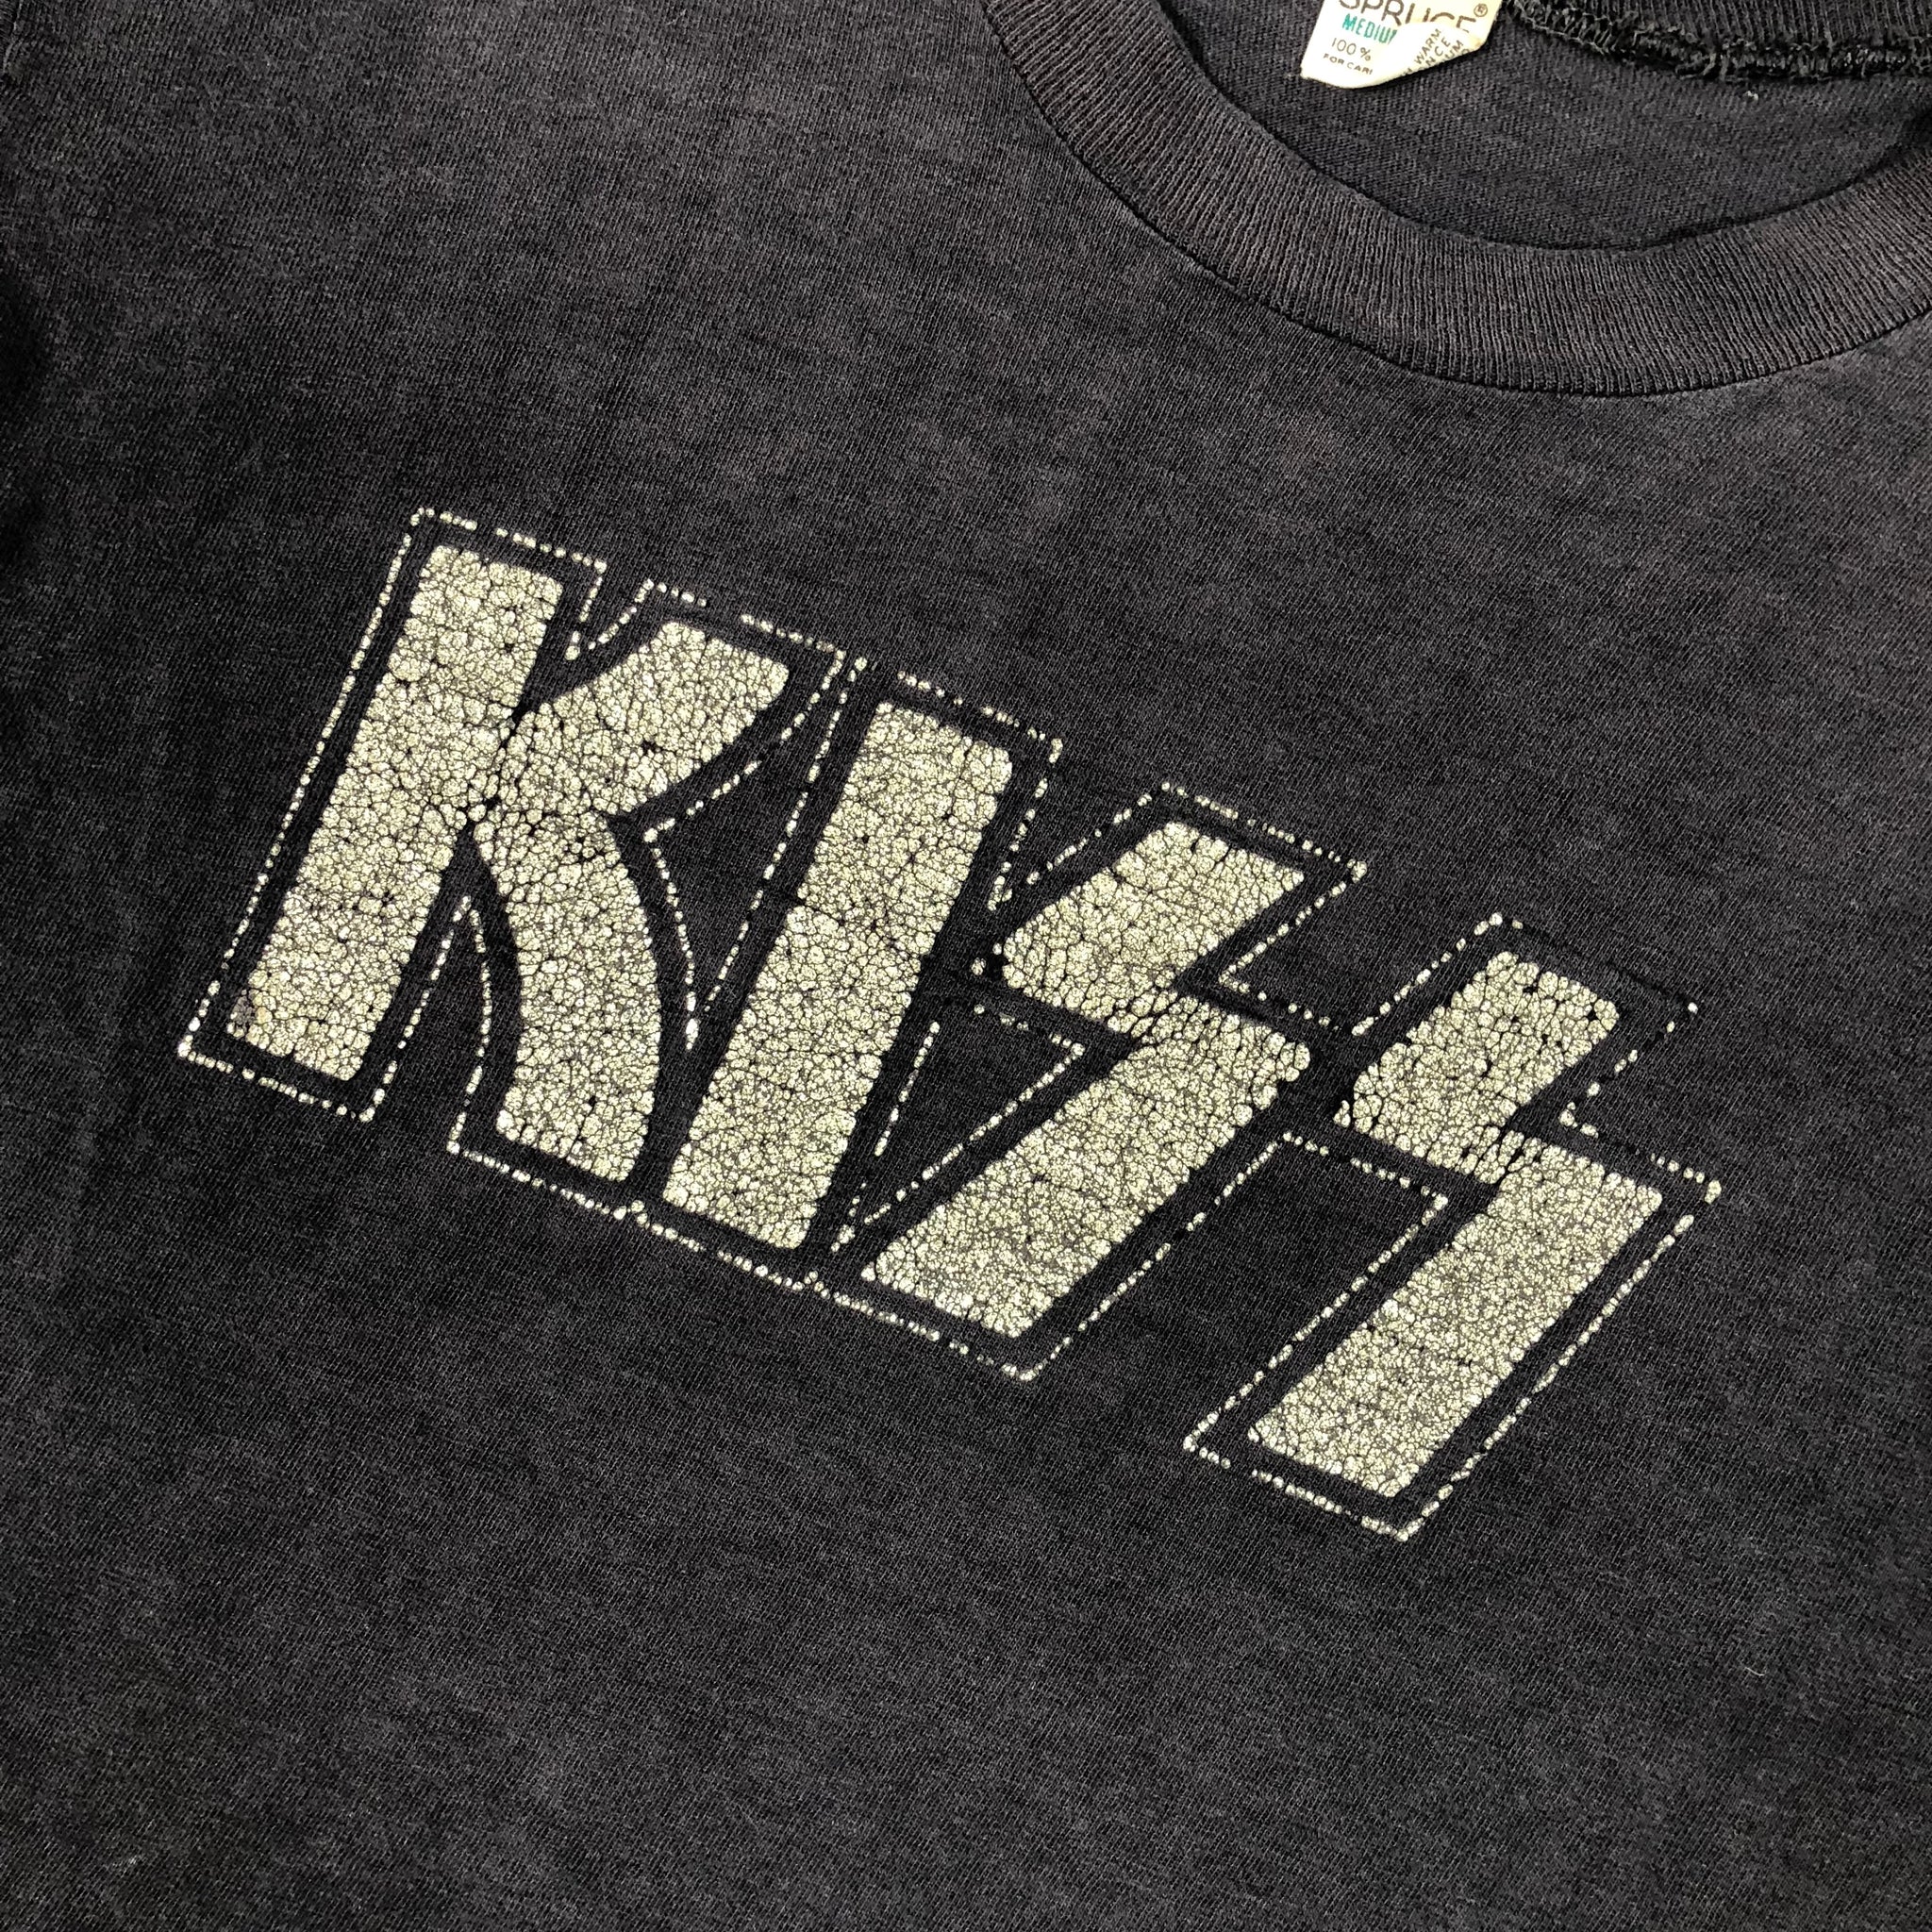 Vintage KISS T-shirt, KISS T-shirt, KISS, Band Tee, Distressed Band T-shirt,  Distressed T-shirt, Reworked Band T-shirt, The Band Kiss